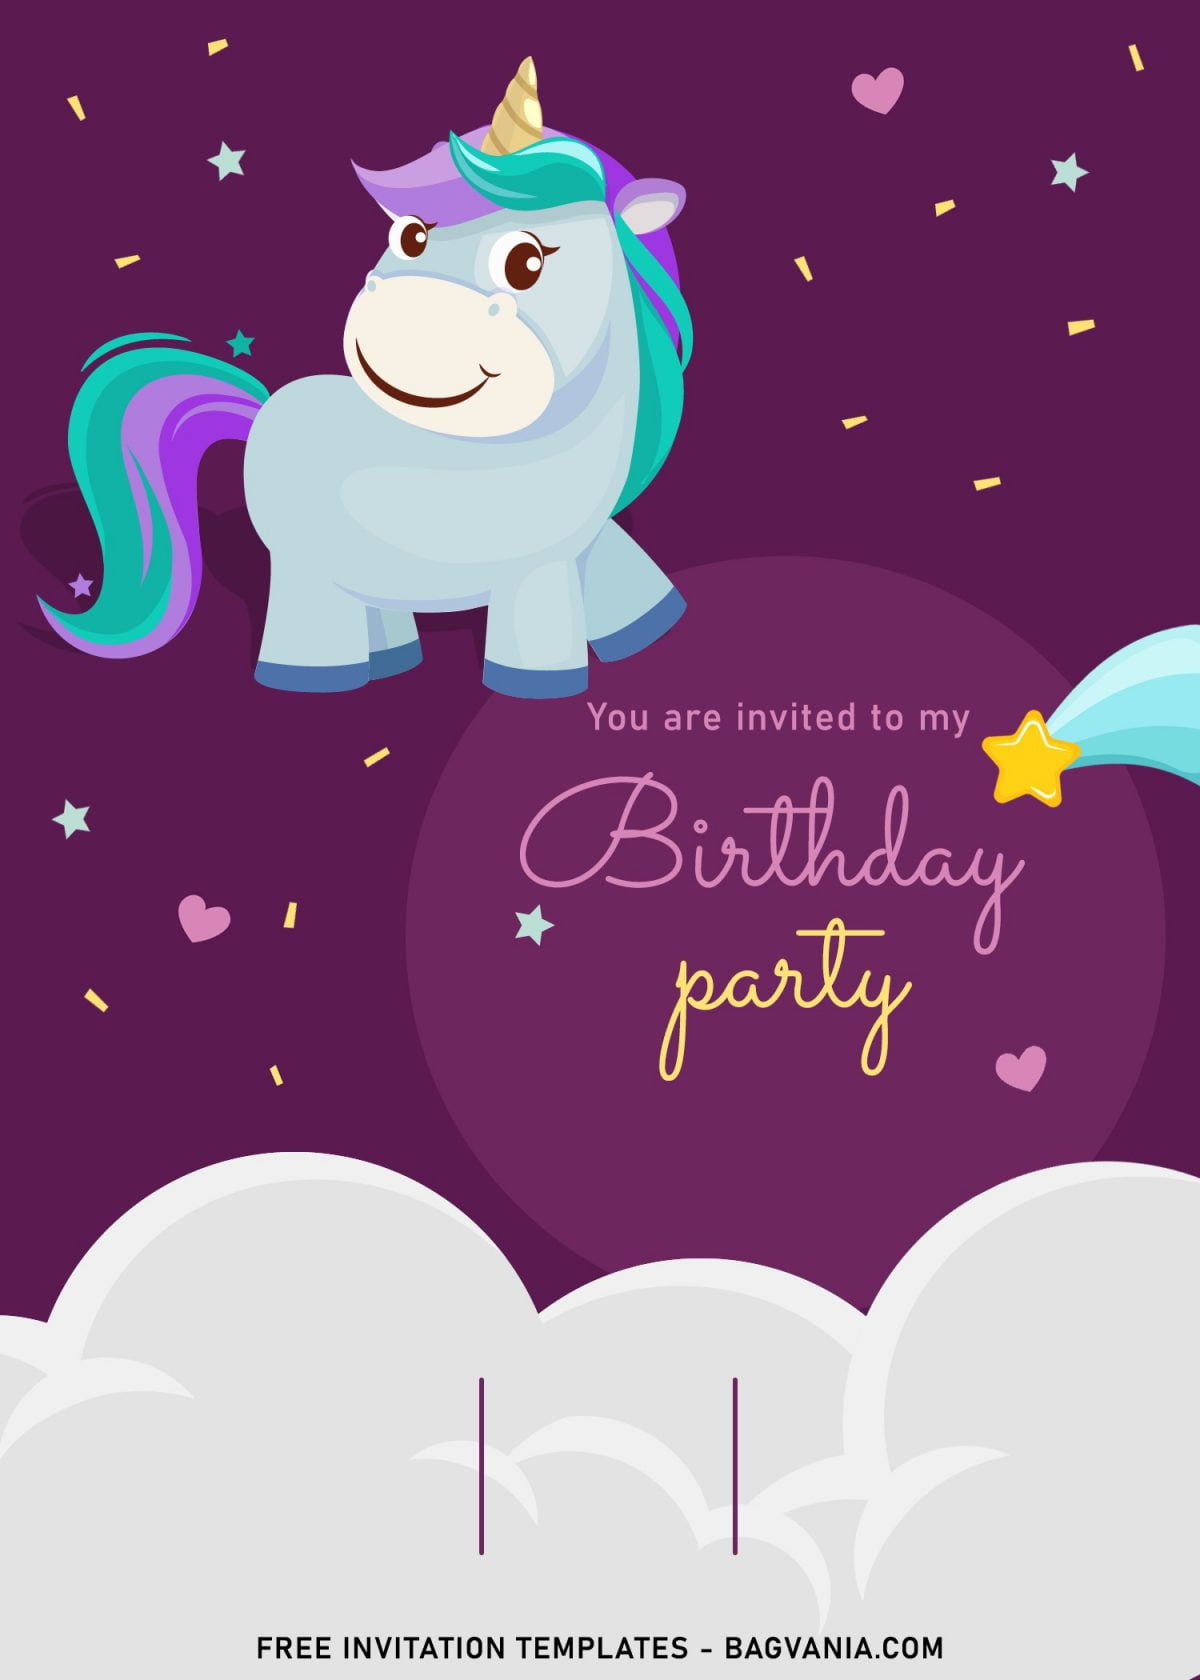 7+ Magical Rainbow Unicorn Birthday Invitation Templates For Kids Birthday Party and has Shooting stars